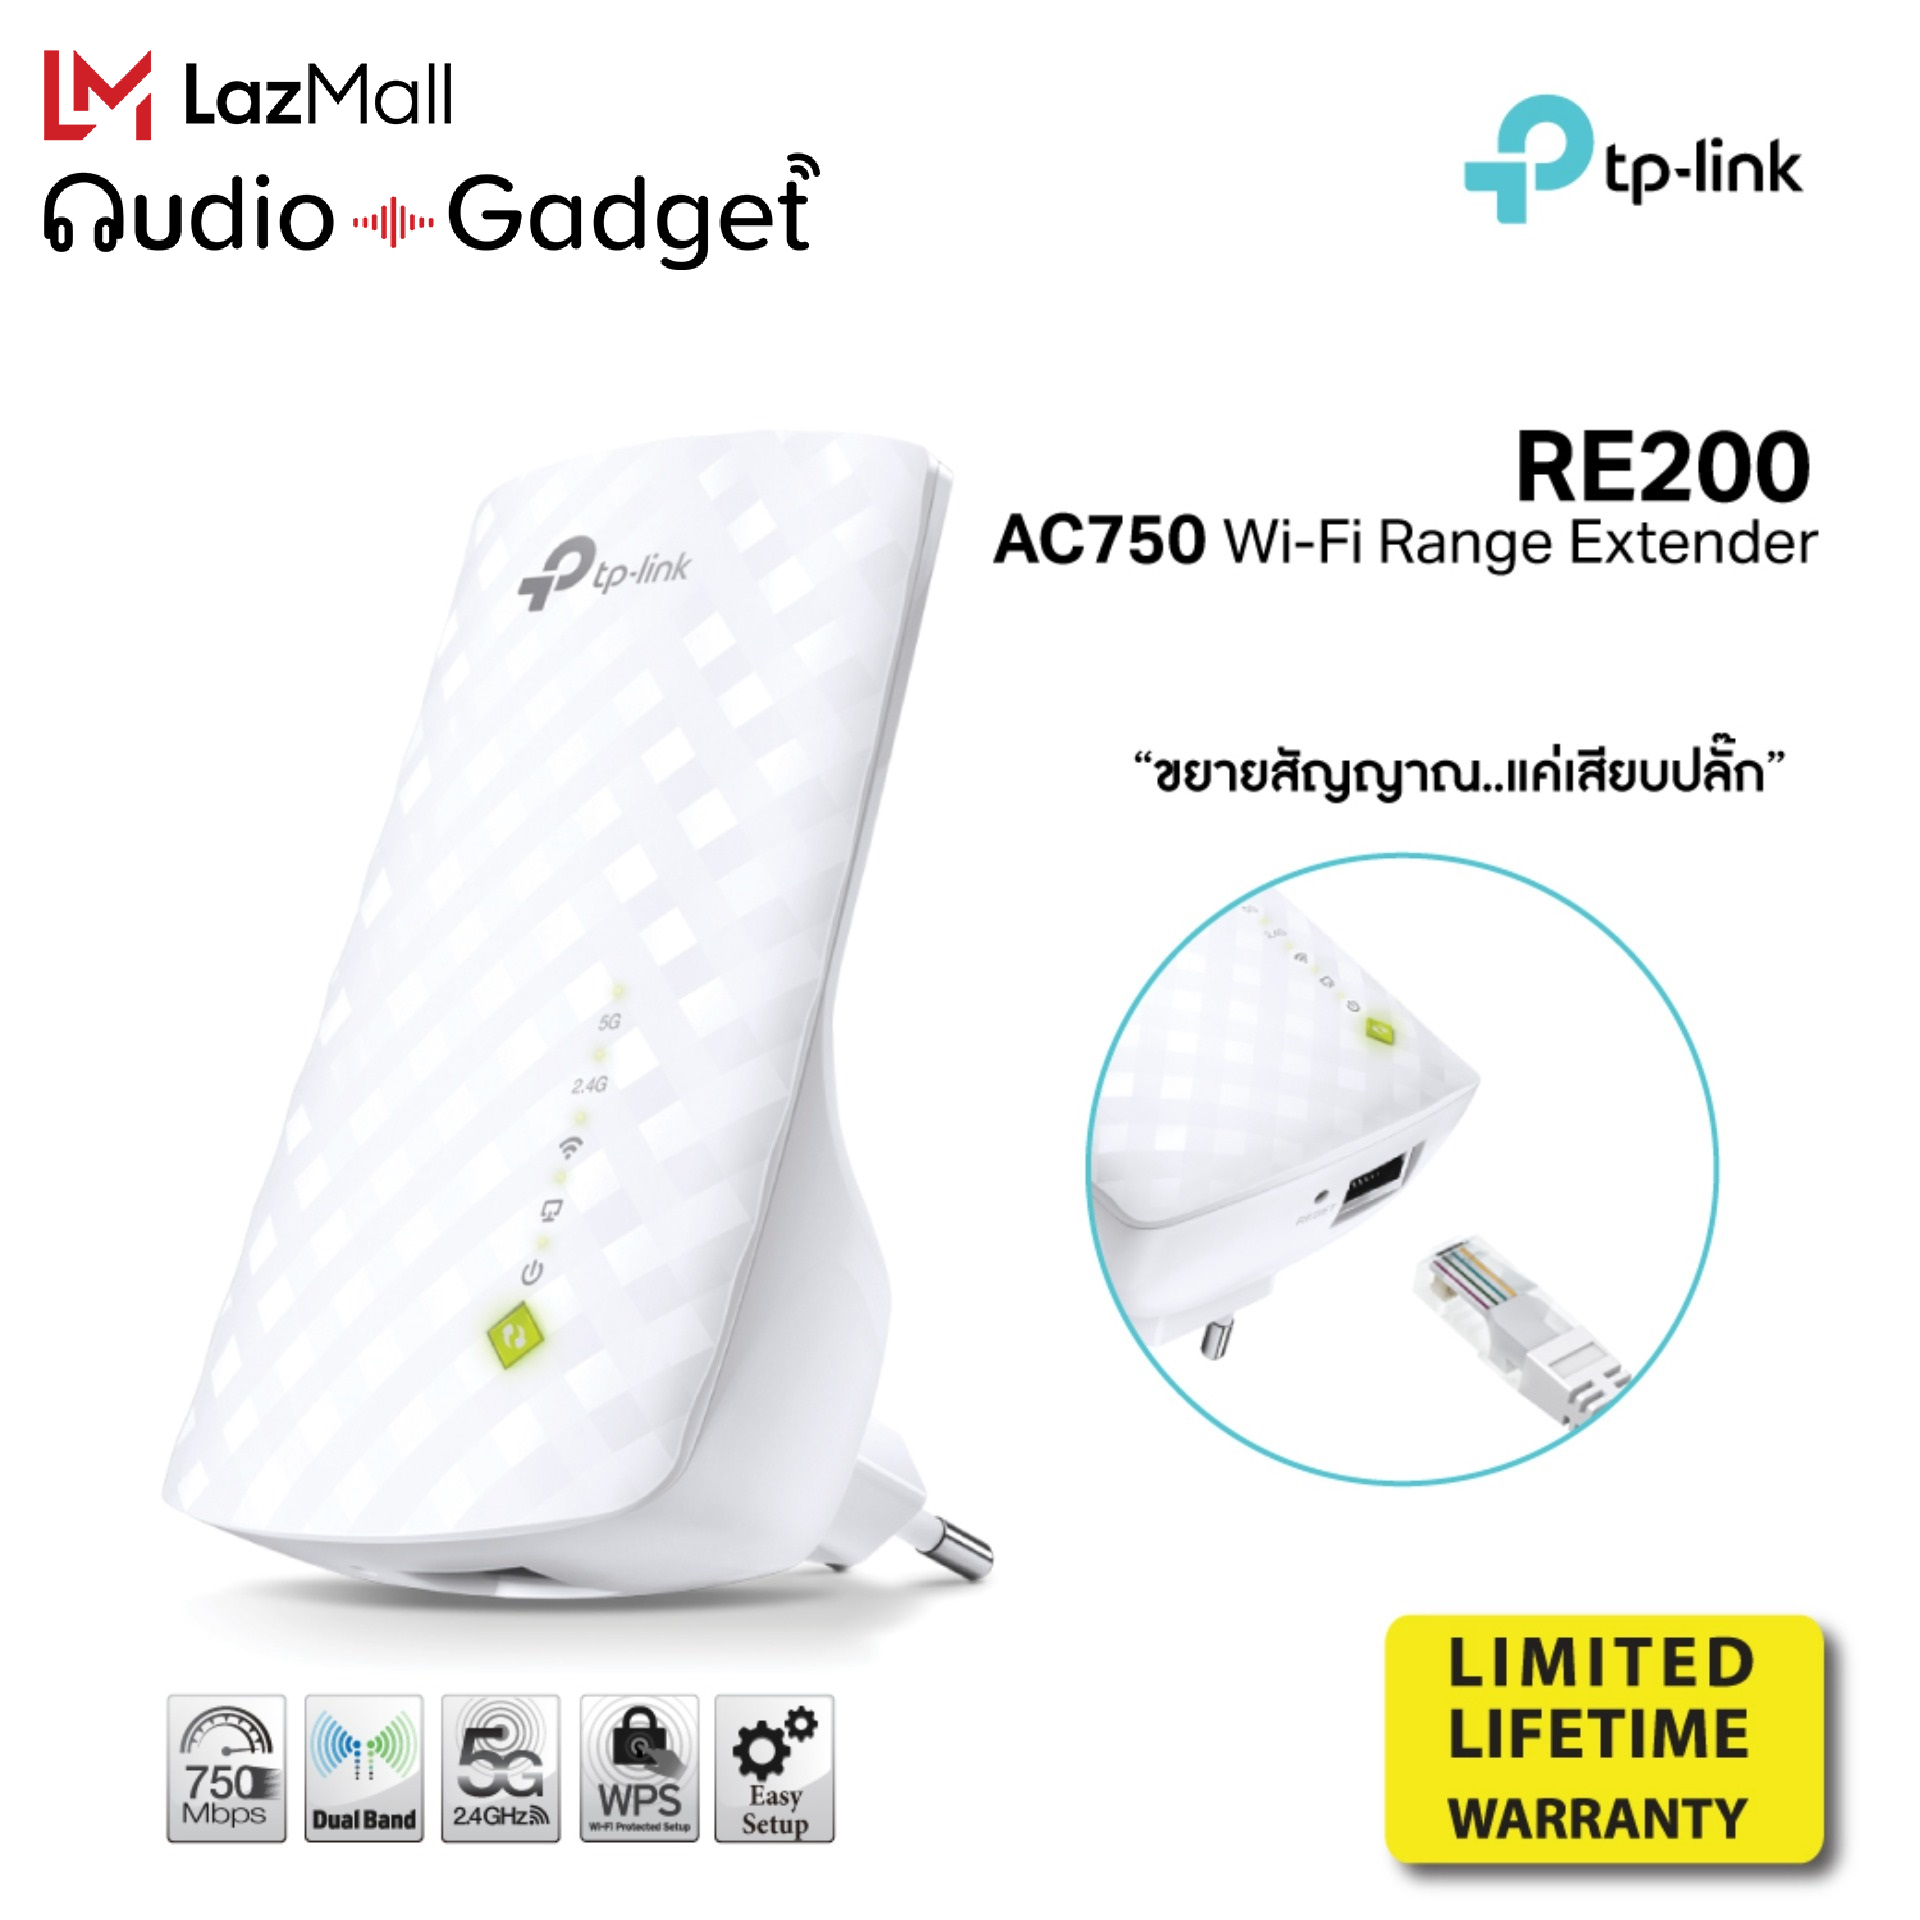 TP-LINK RE200 AC750 Wi-Fi Range Extender  (Limited Lifetime Warranty) ( อุปกรณ์ขยายสัญญาณ Wi-Fi Repeater อุปกรณ์เน็ตเวิร์ค )